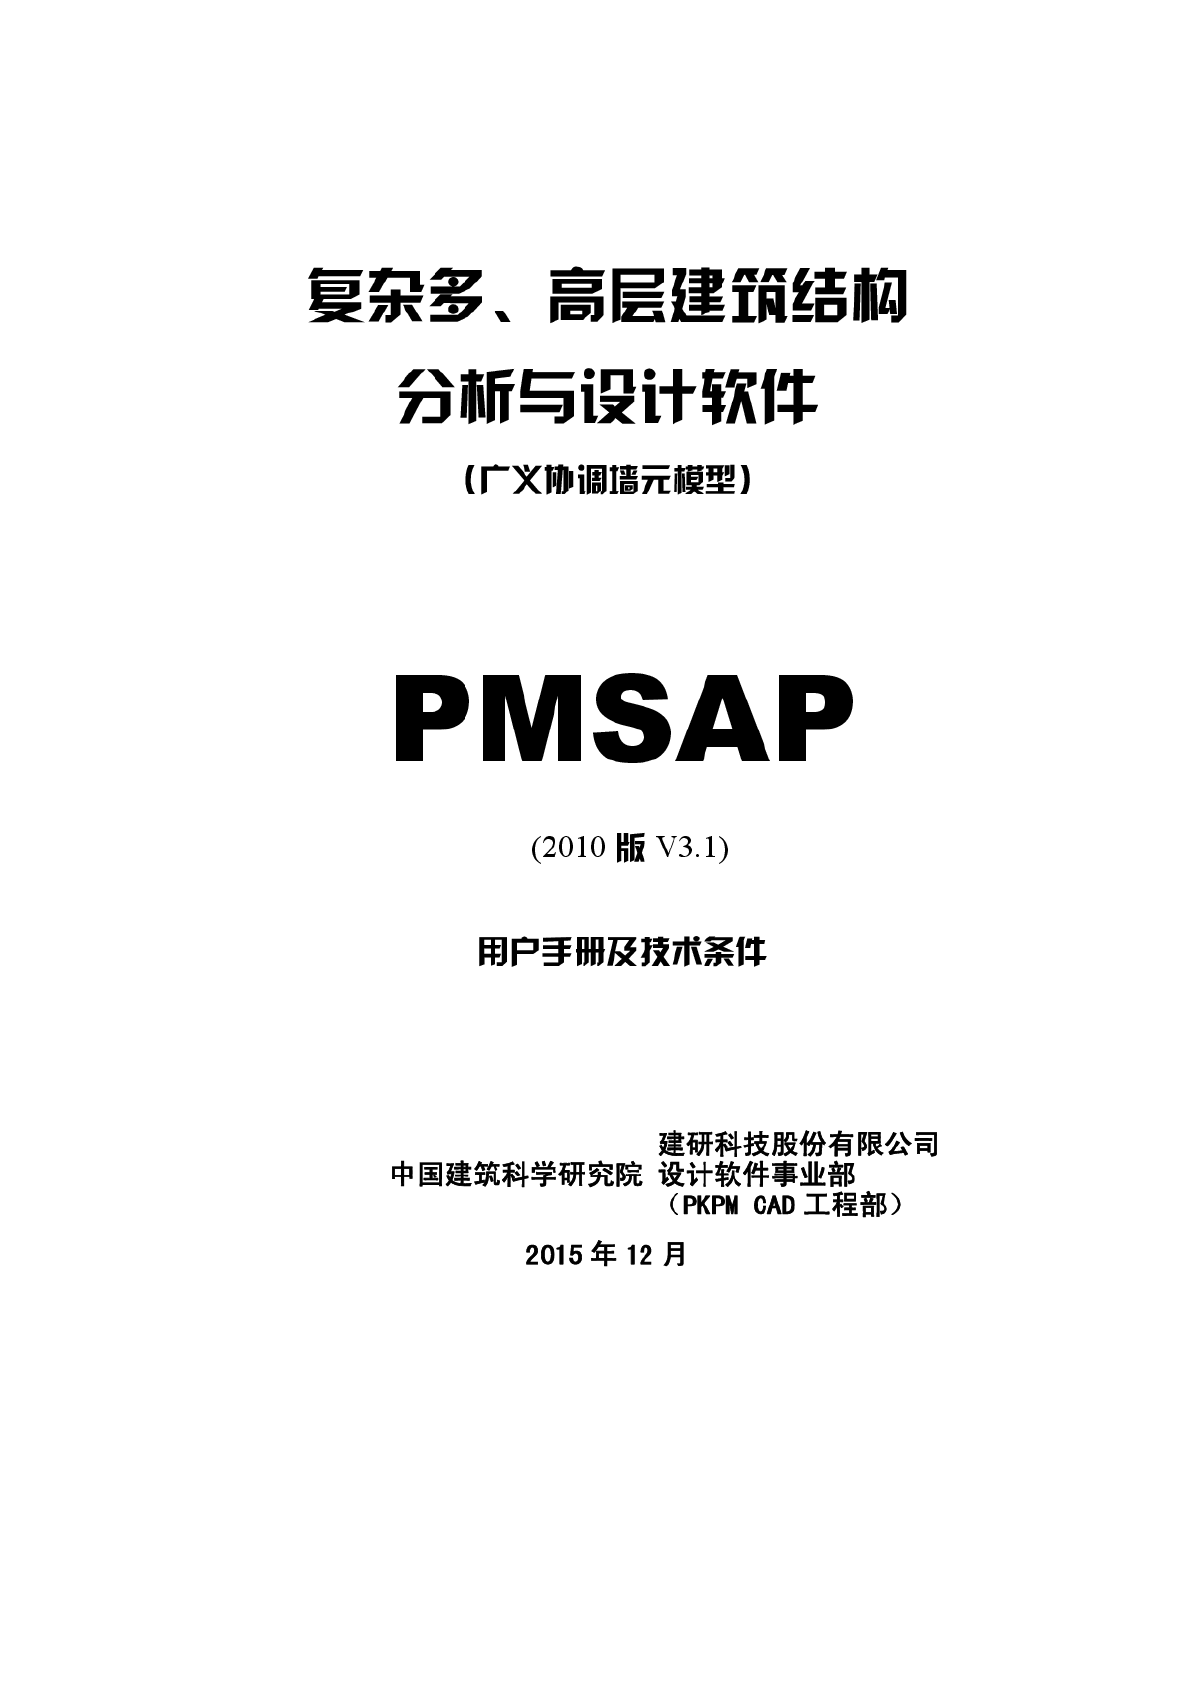 PKPMv3.1-pmsap(V3.1)用户手册-图一